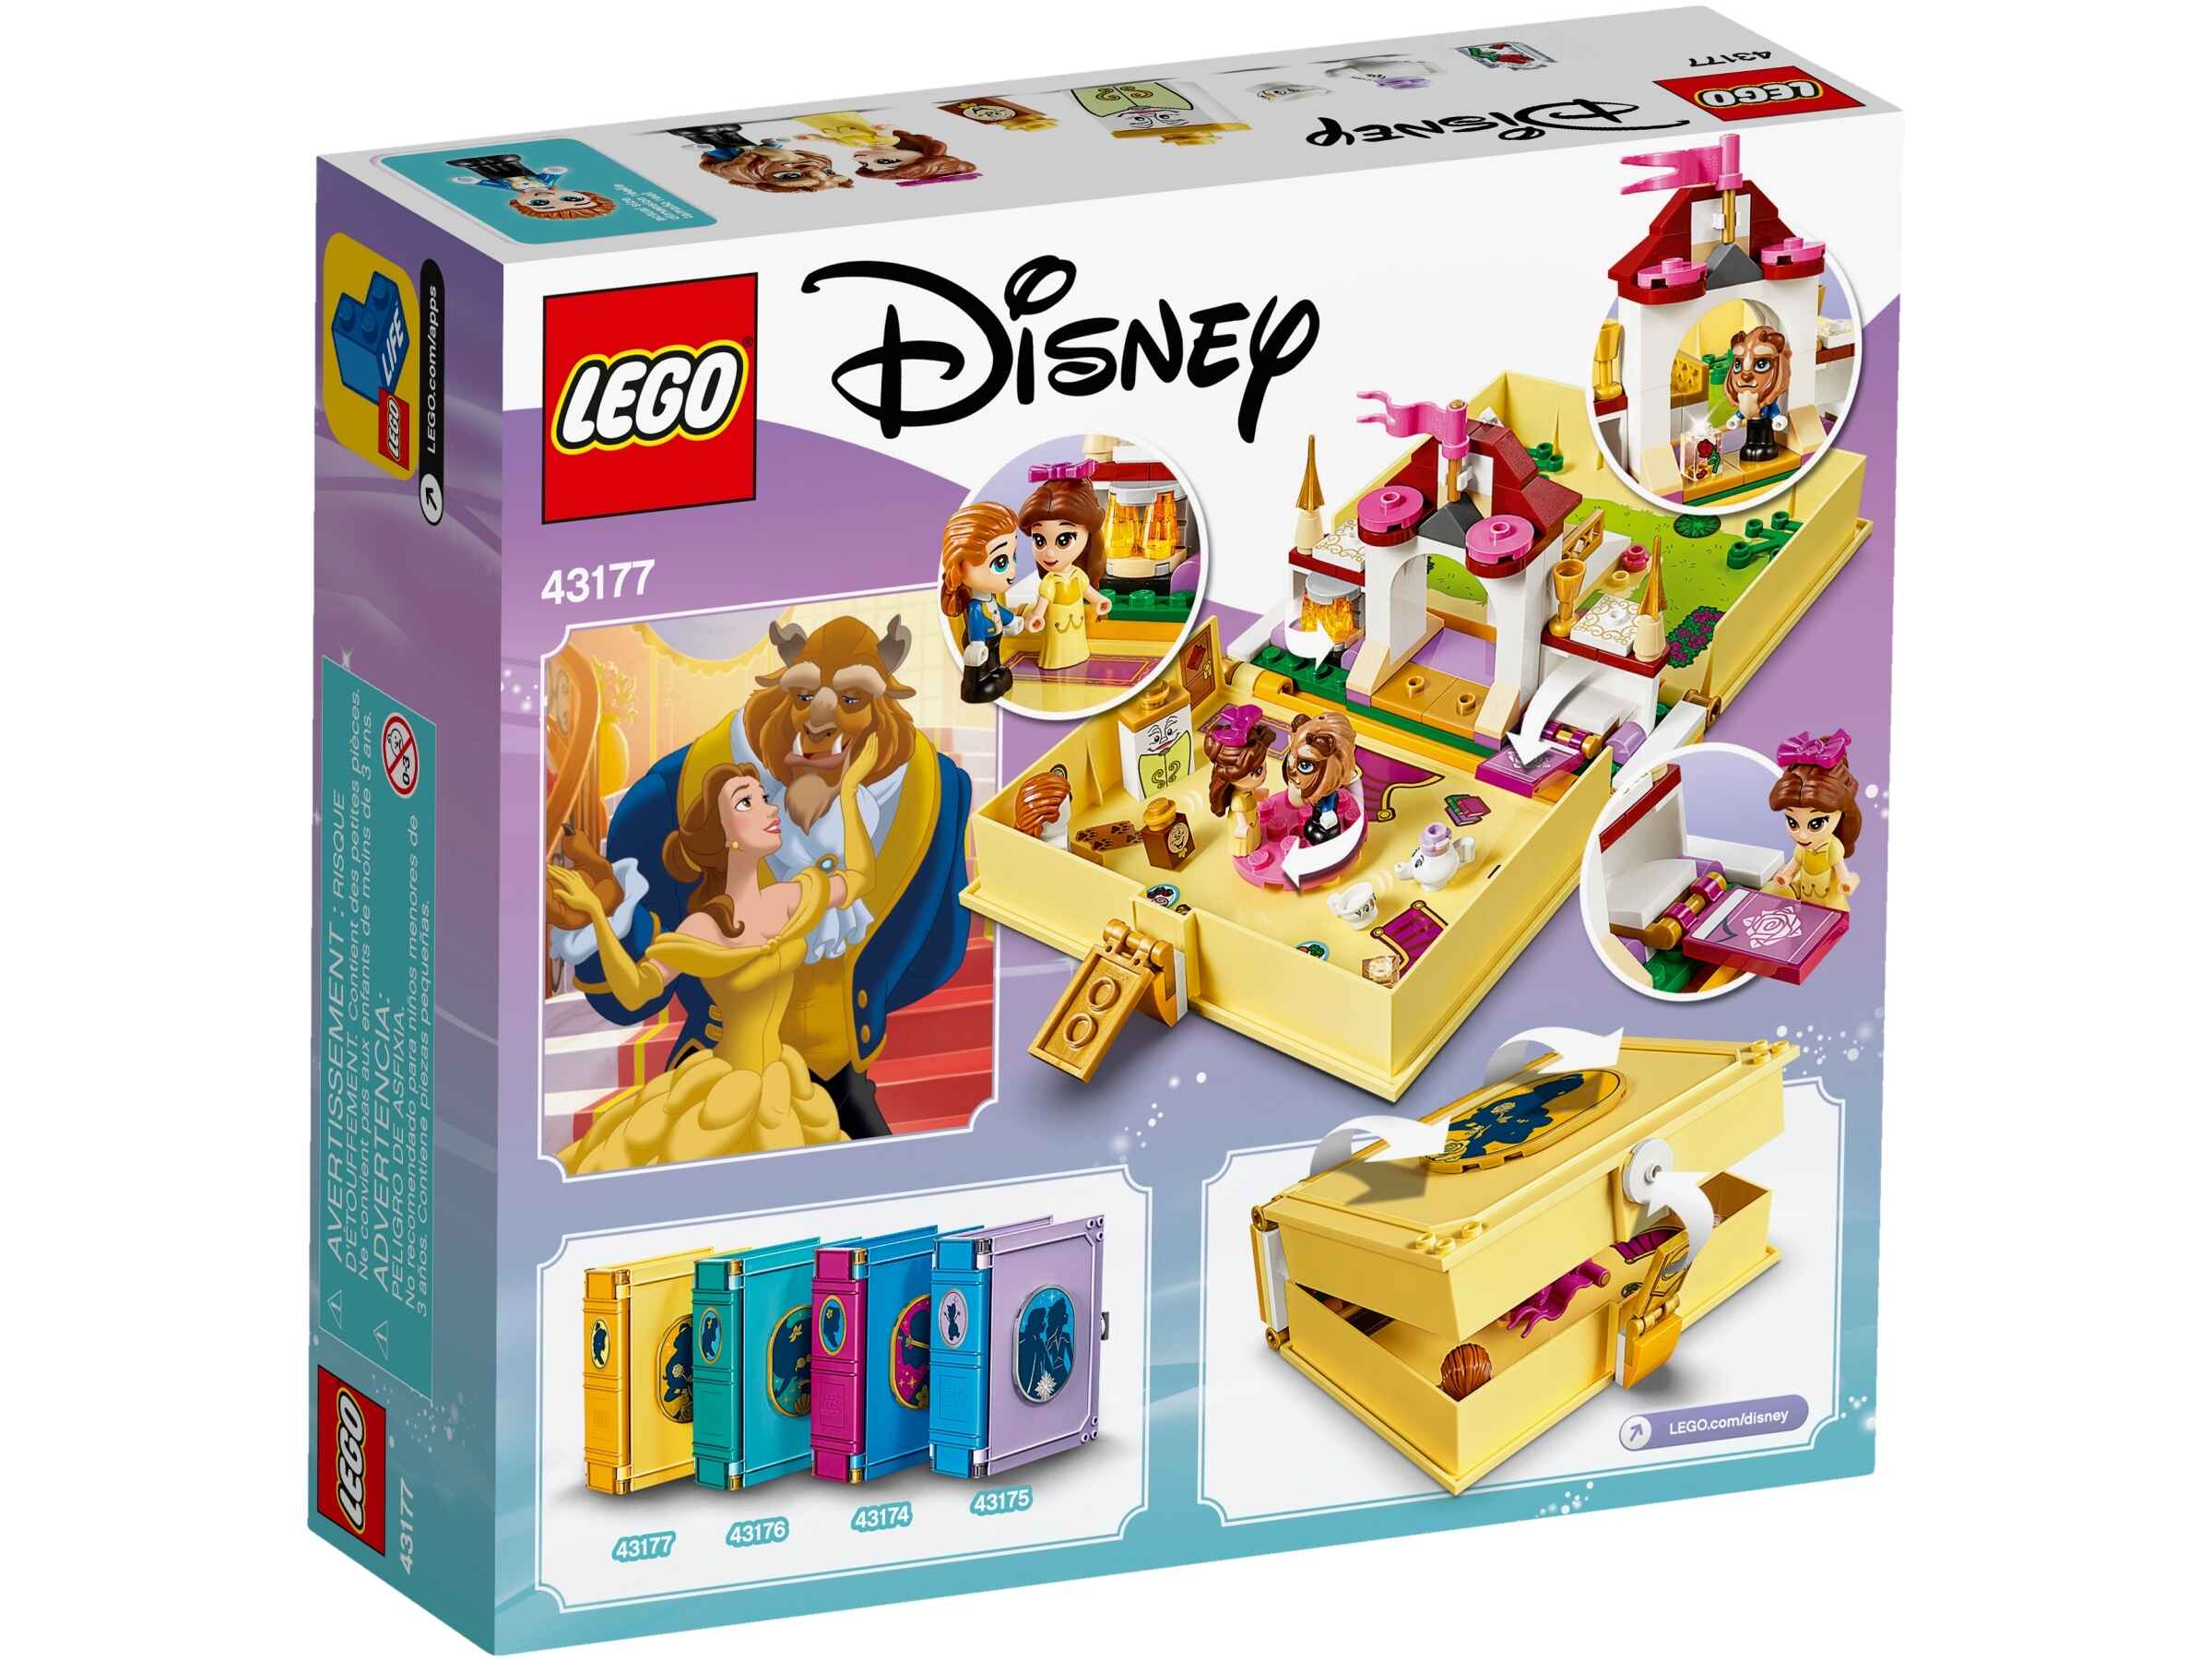 LEGO 43177 Belles Abenteuer-Set, Lobigo.de: Spielset: Disney Märchenbuch Spielzeug tragbares Princess